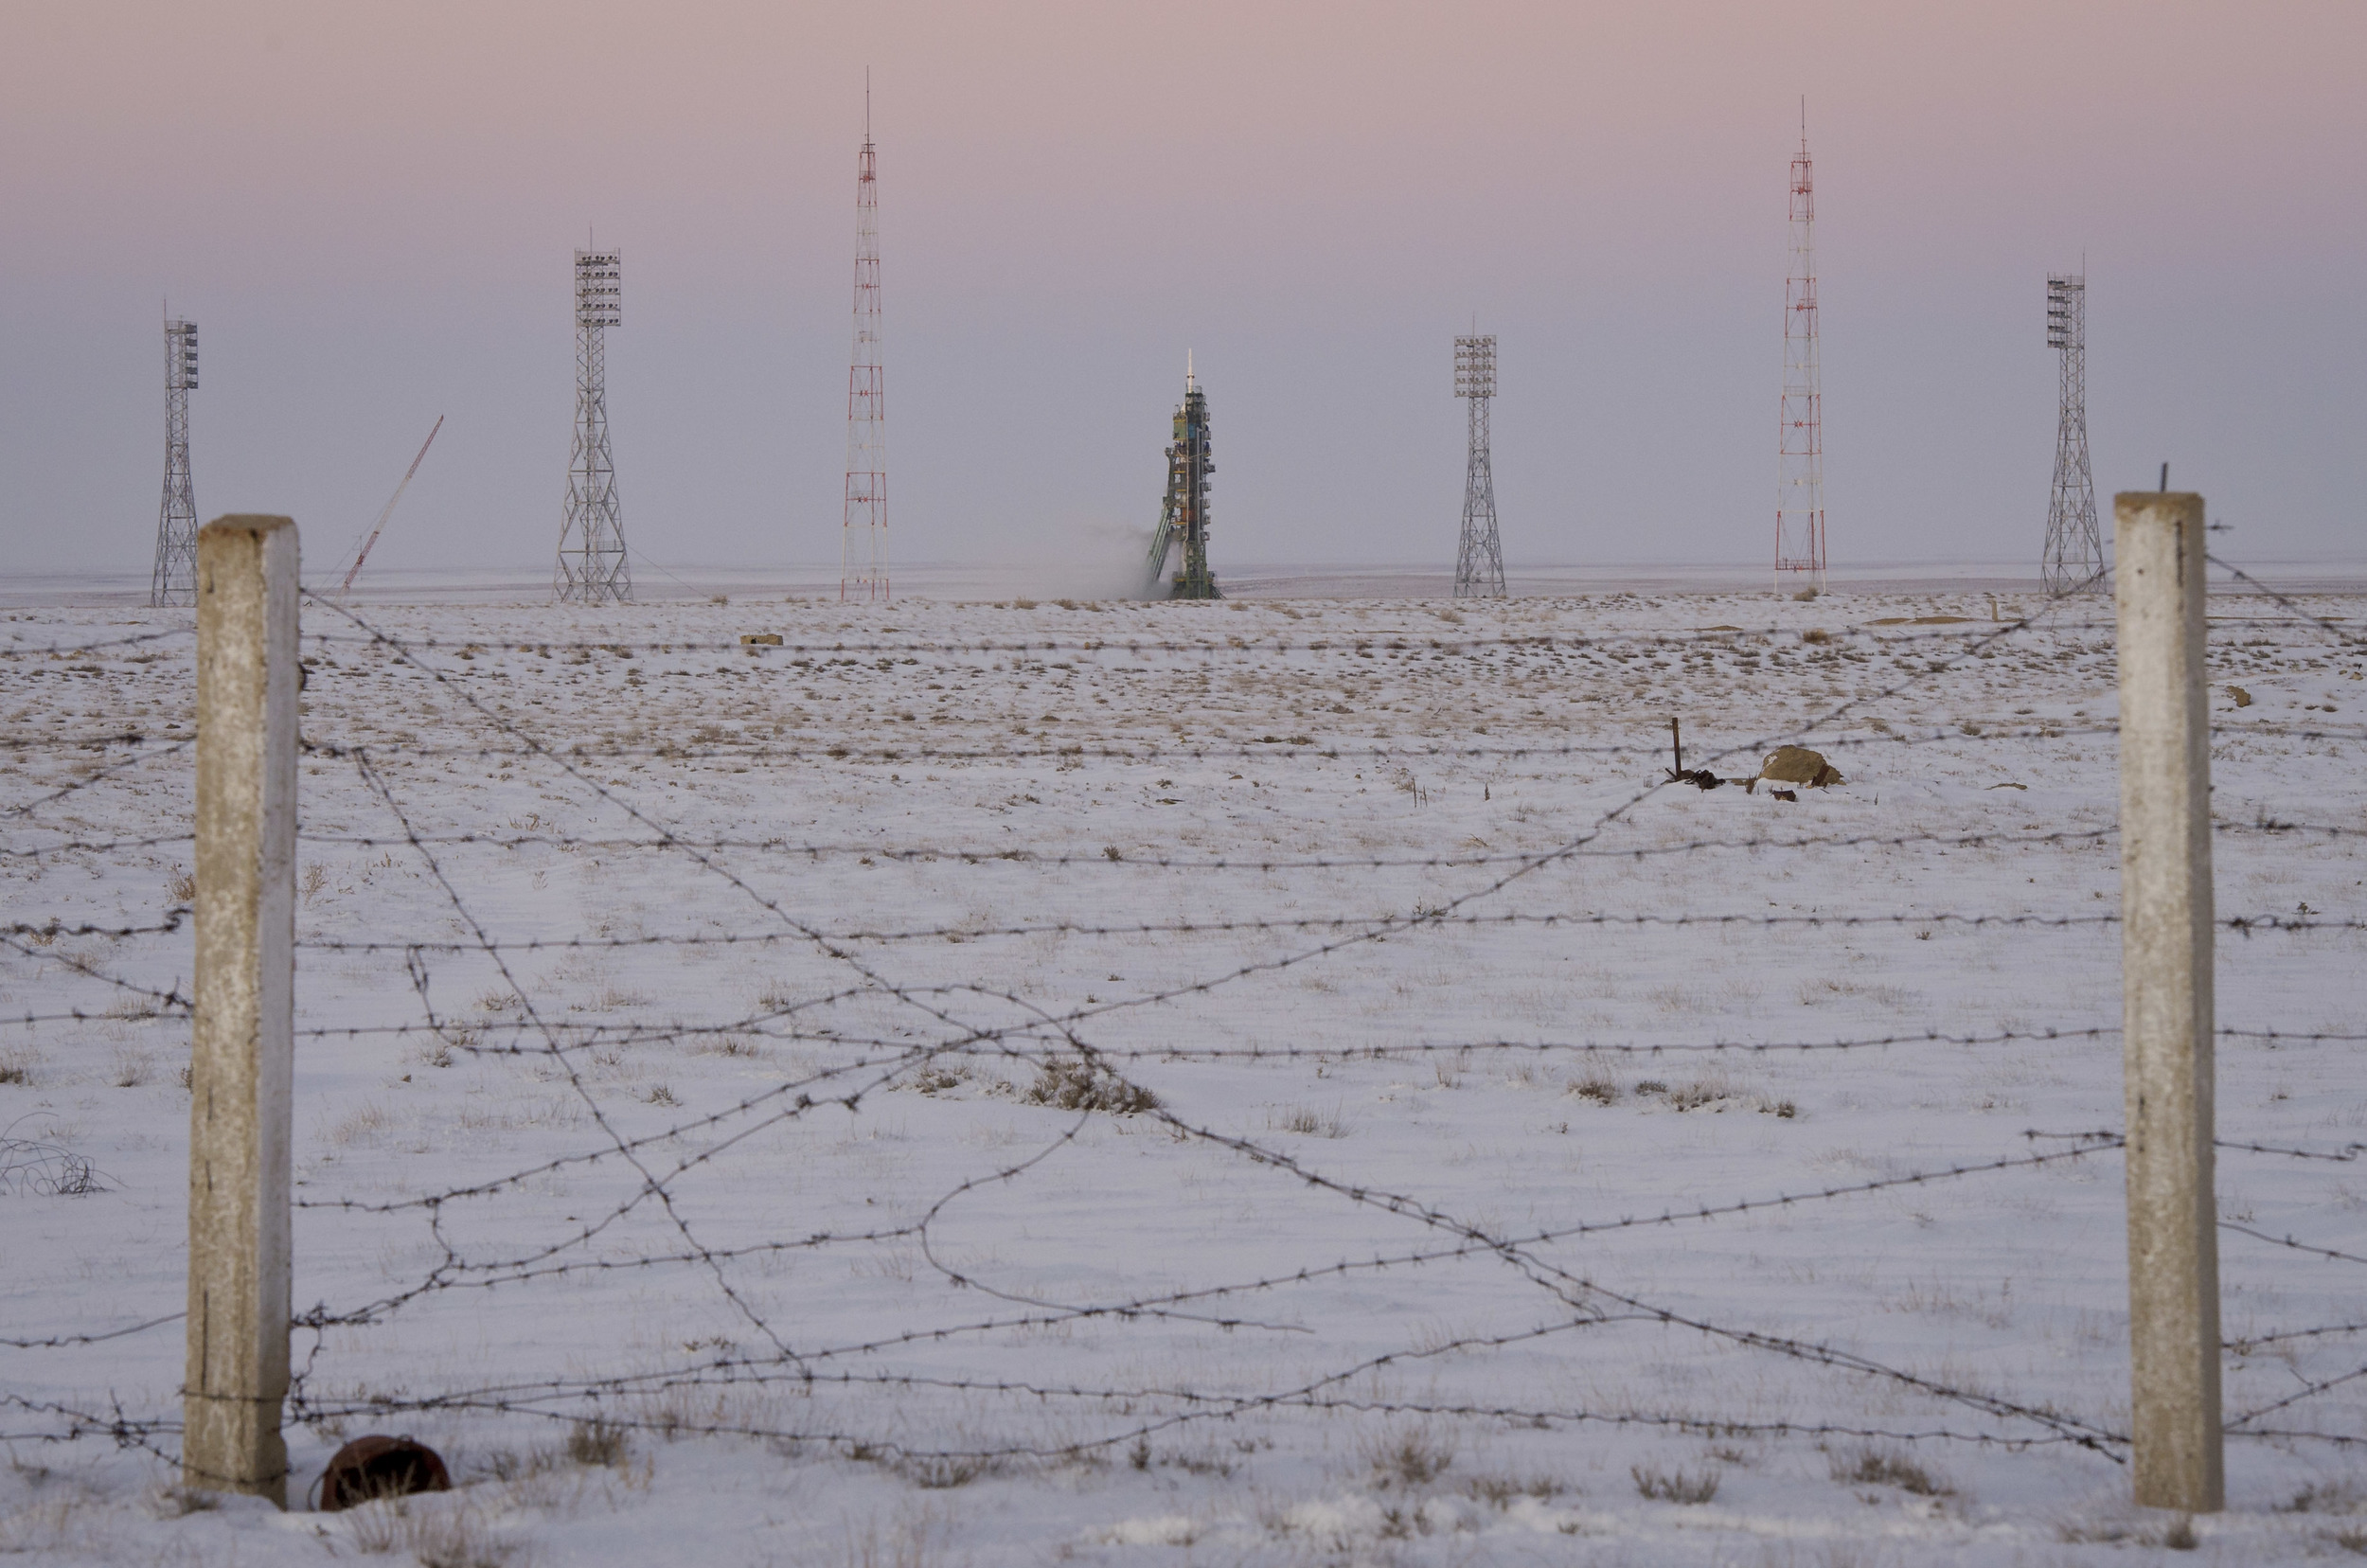  The Soyuz TMA-03M spacecraft is seen at dusk an hour before launch at the Baikonur Cosmodrome in Kazakhstan, Wednesday, Dec. 21, 2011. The crew of Expedition 30, NASA Flight Engineer Don Pettit, Soyuz Commander Oleg Konenko, ESA (European Space Agen